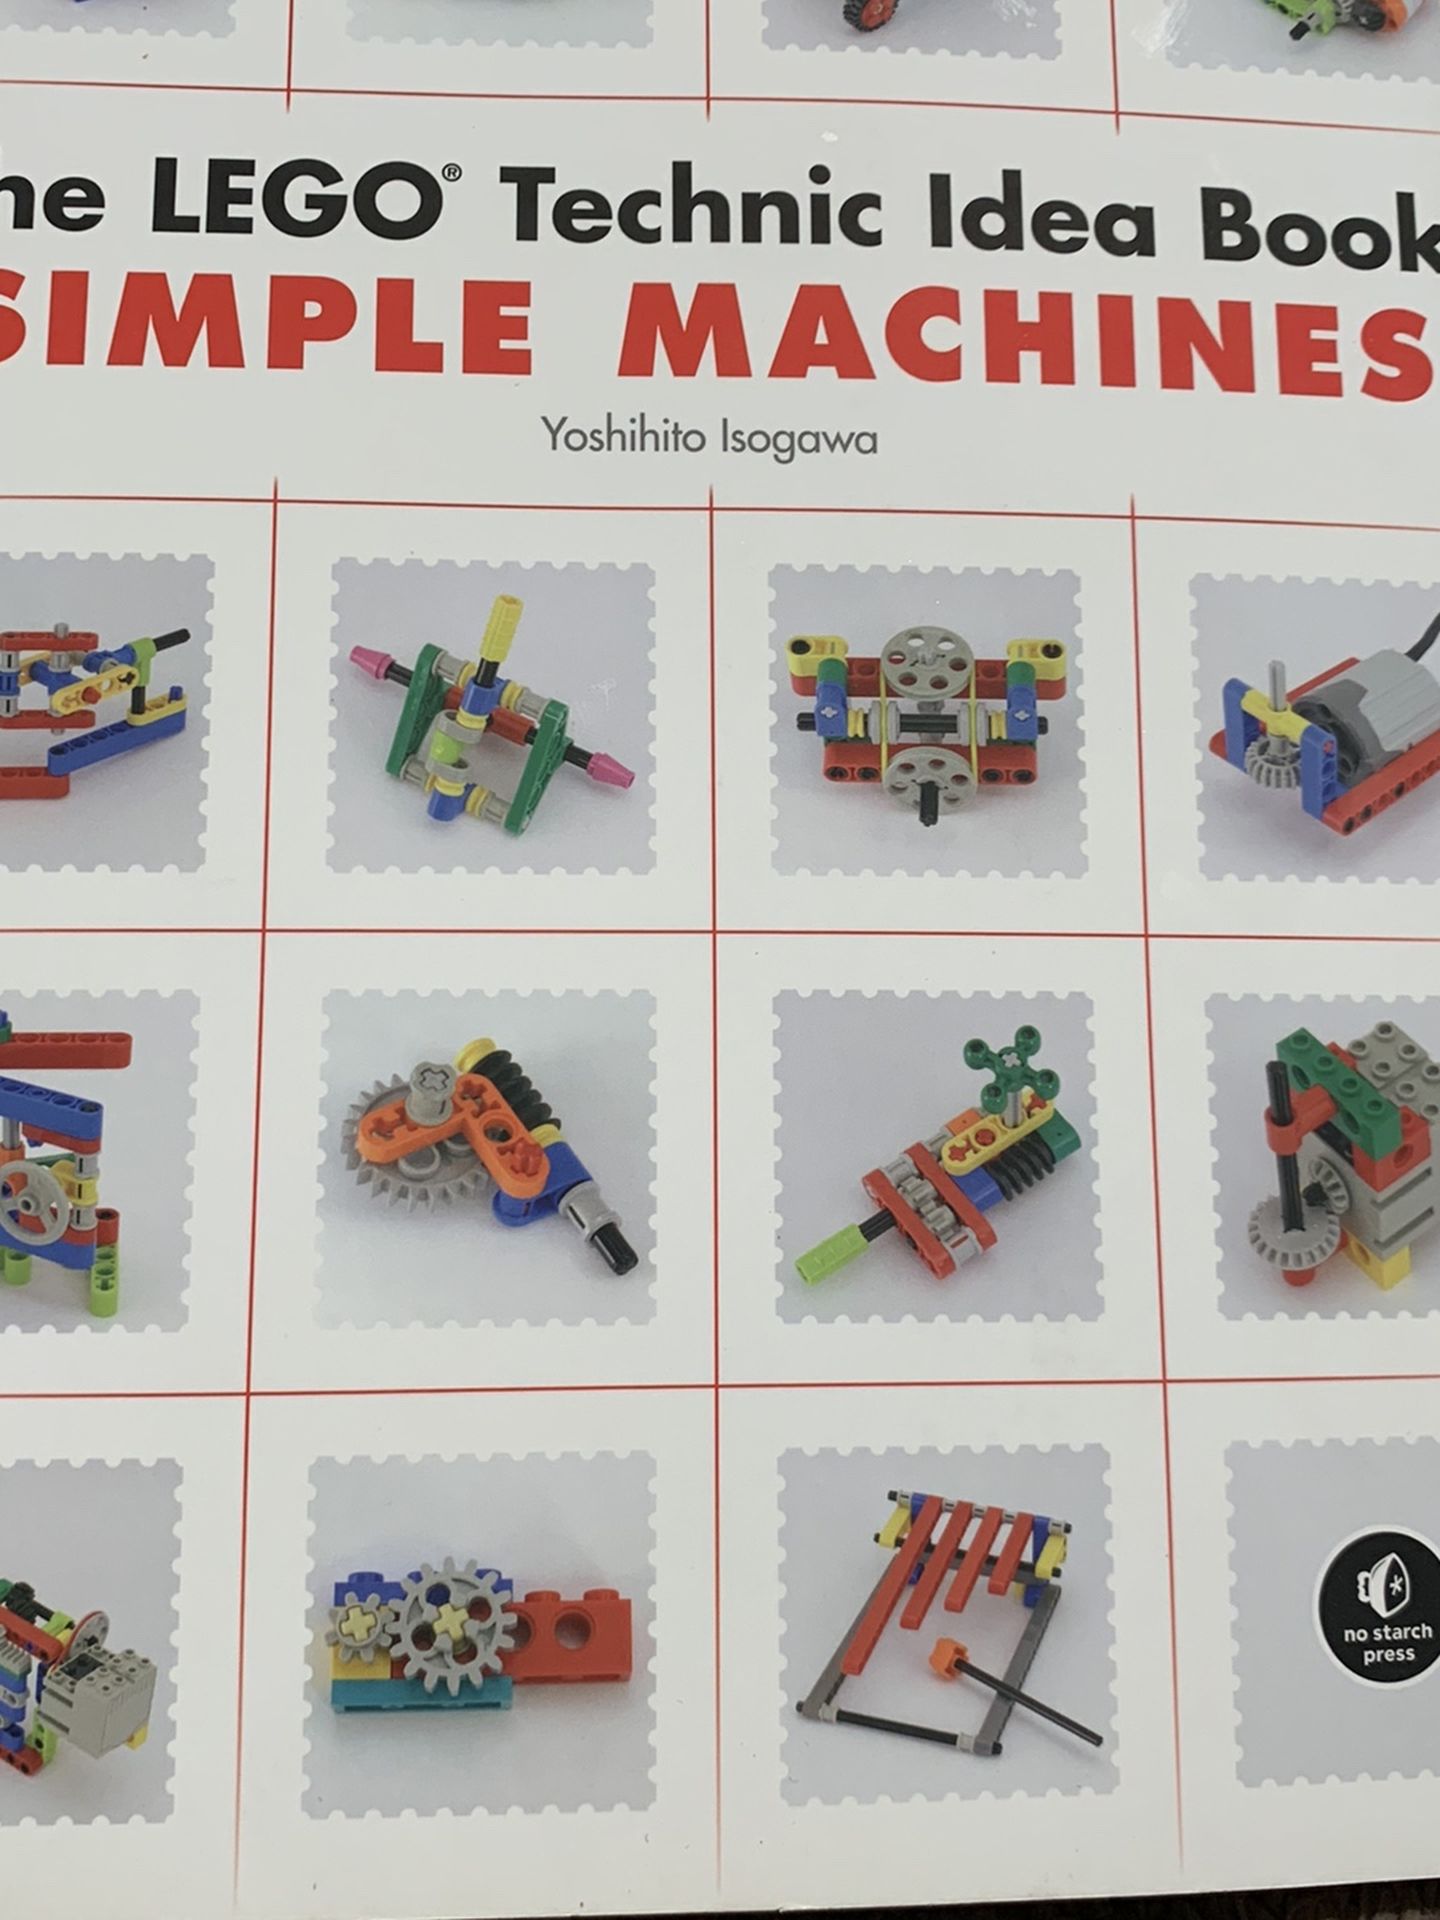 The LEGO Technic idea Book/Simple Machines